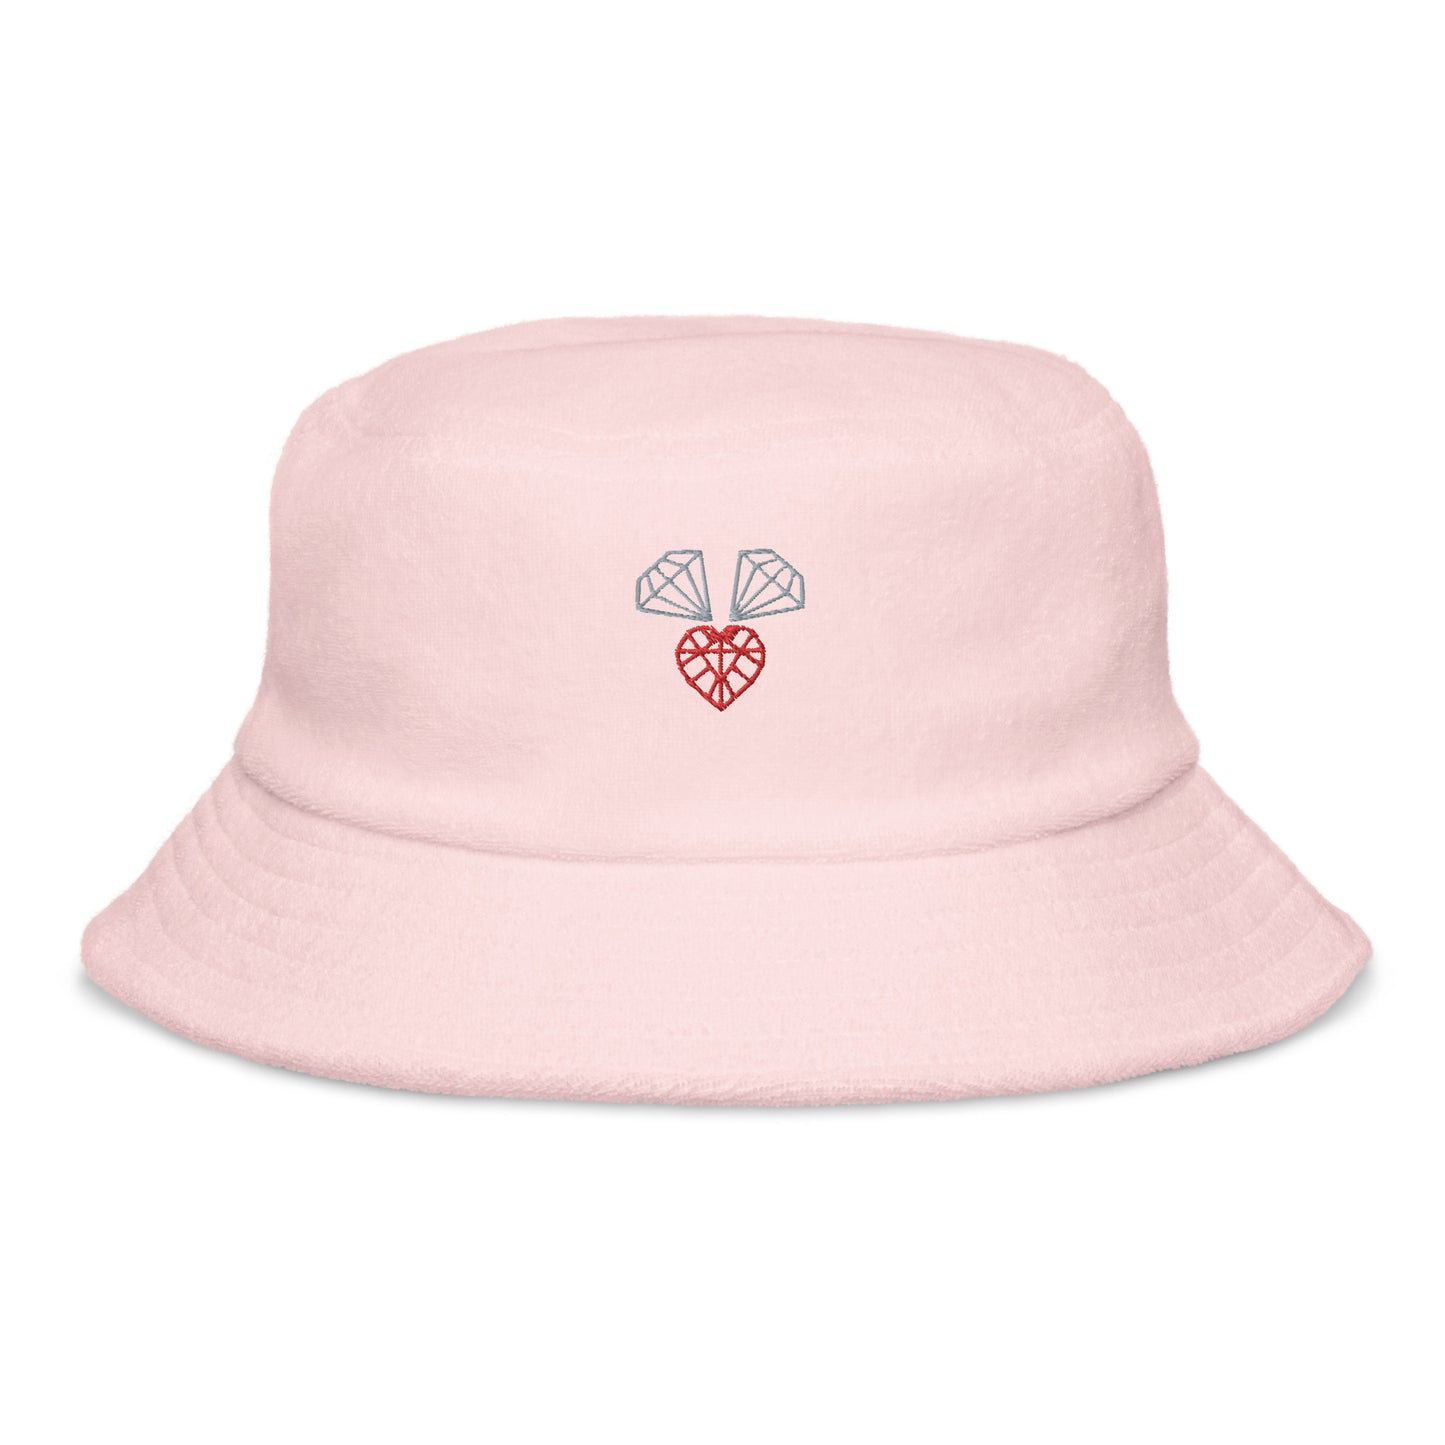 Terry Cloth 3 Diamond Bucket Hat